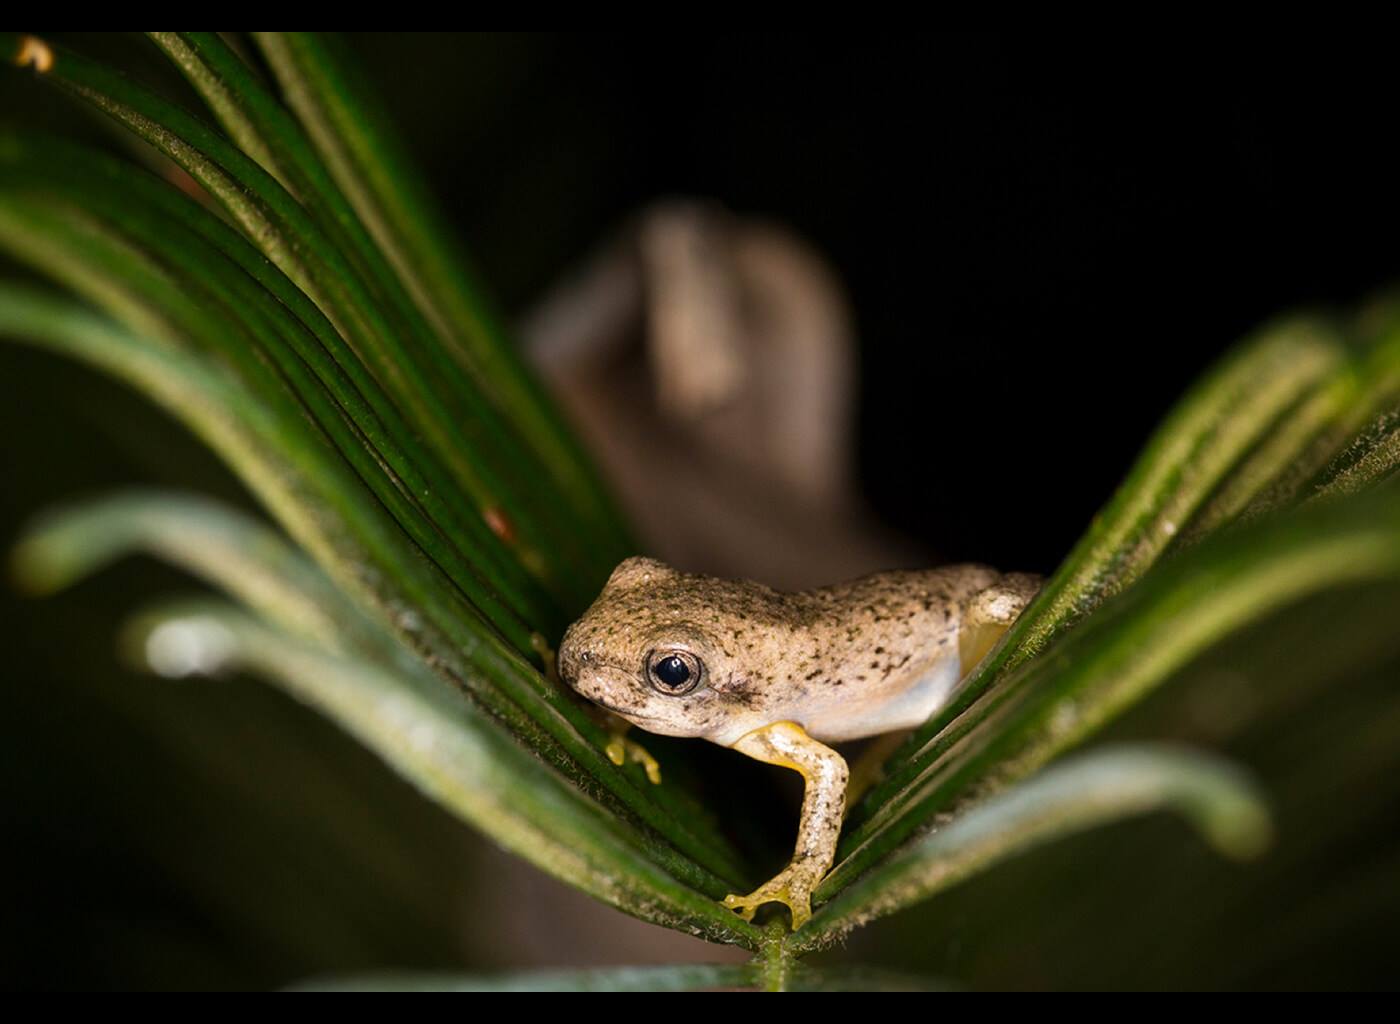 Frog macro photography - Canon sustainability